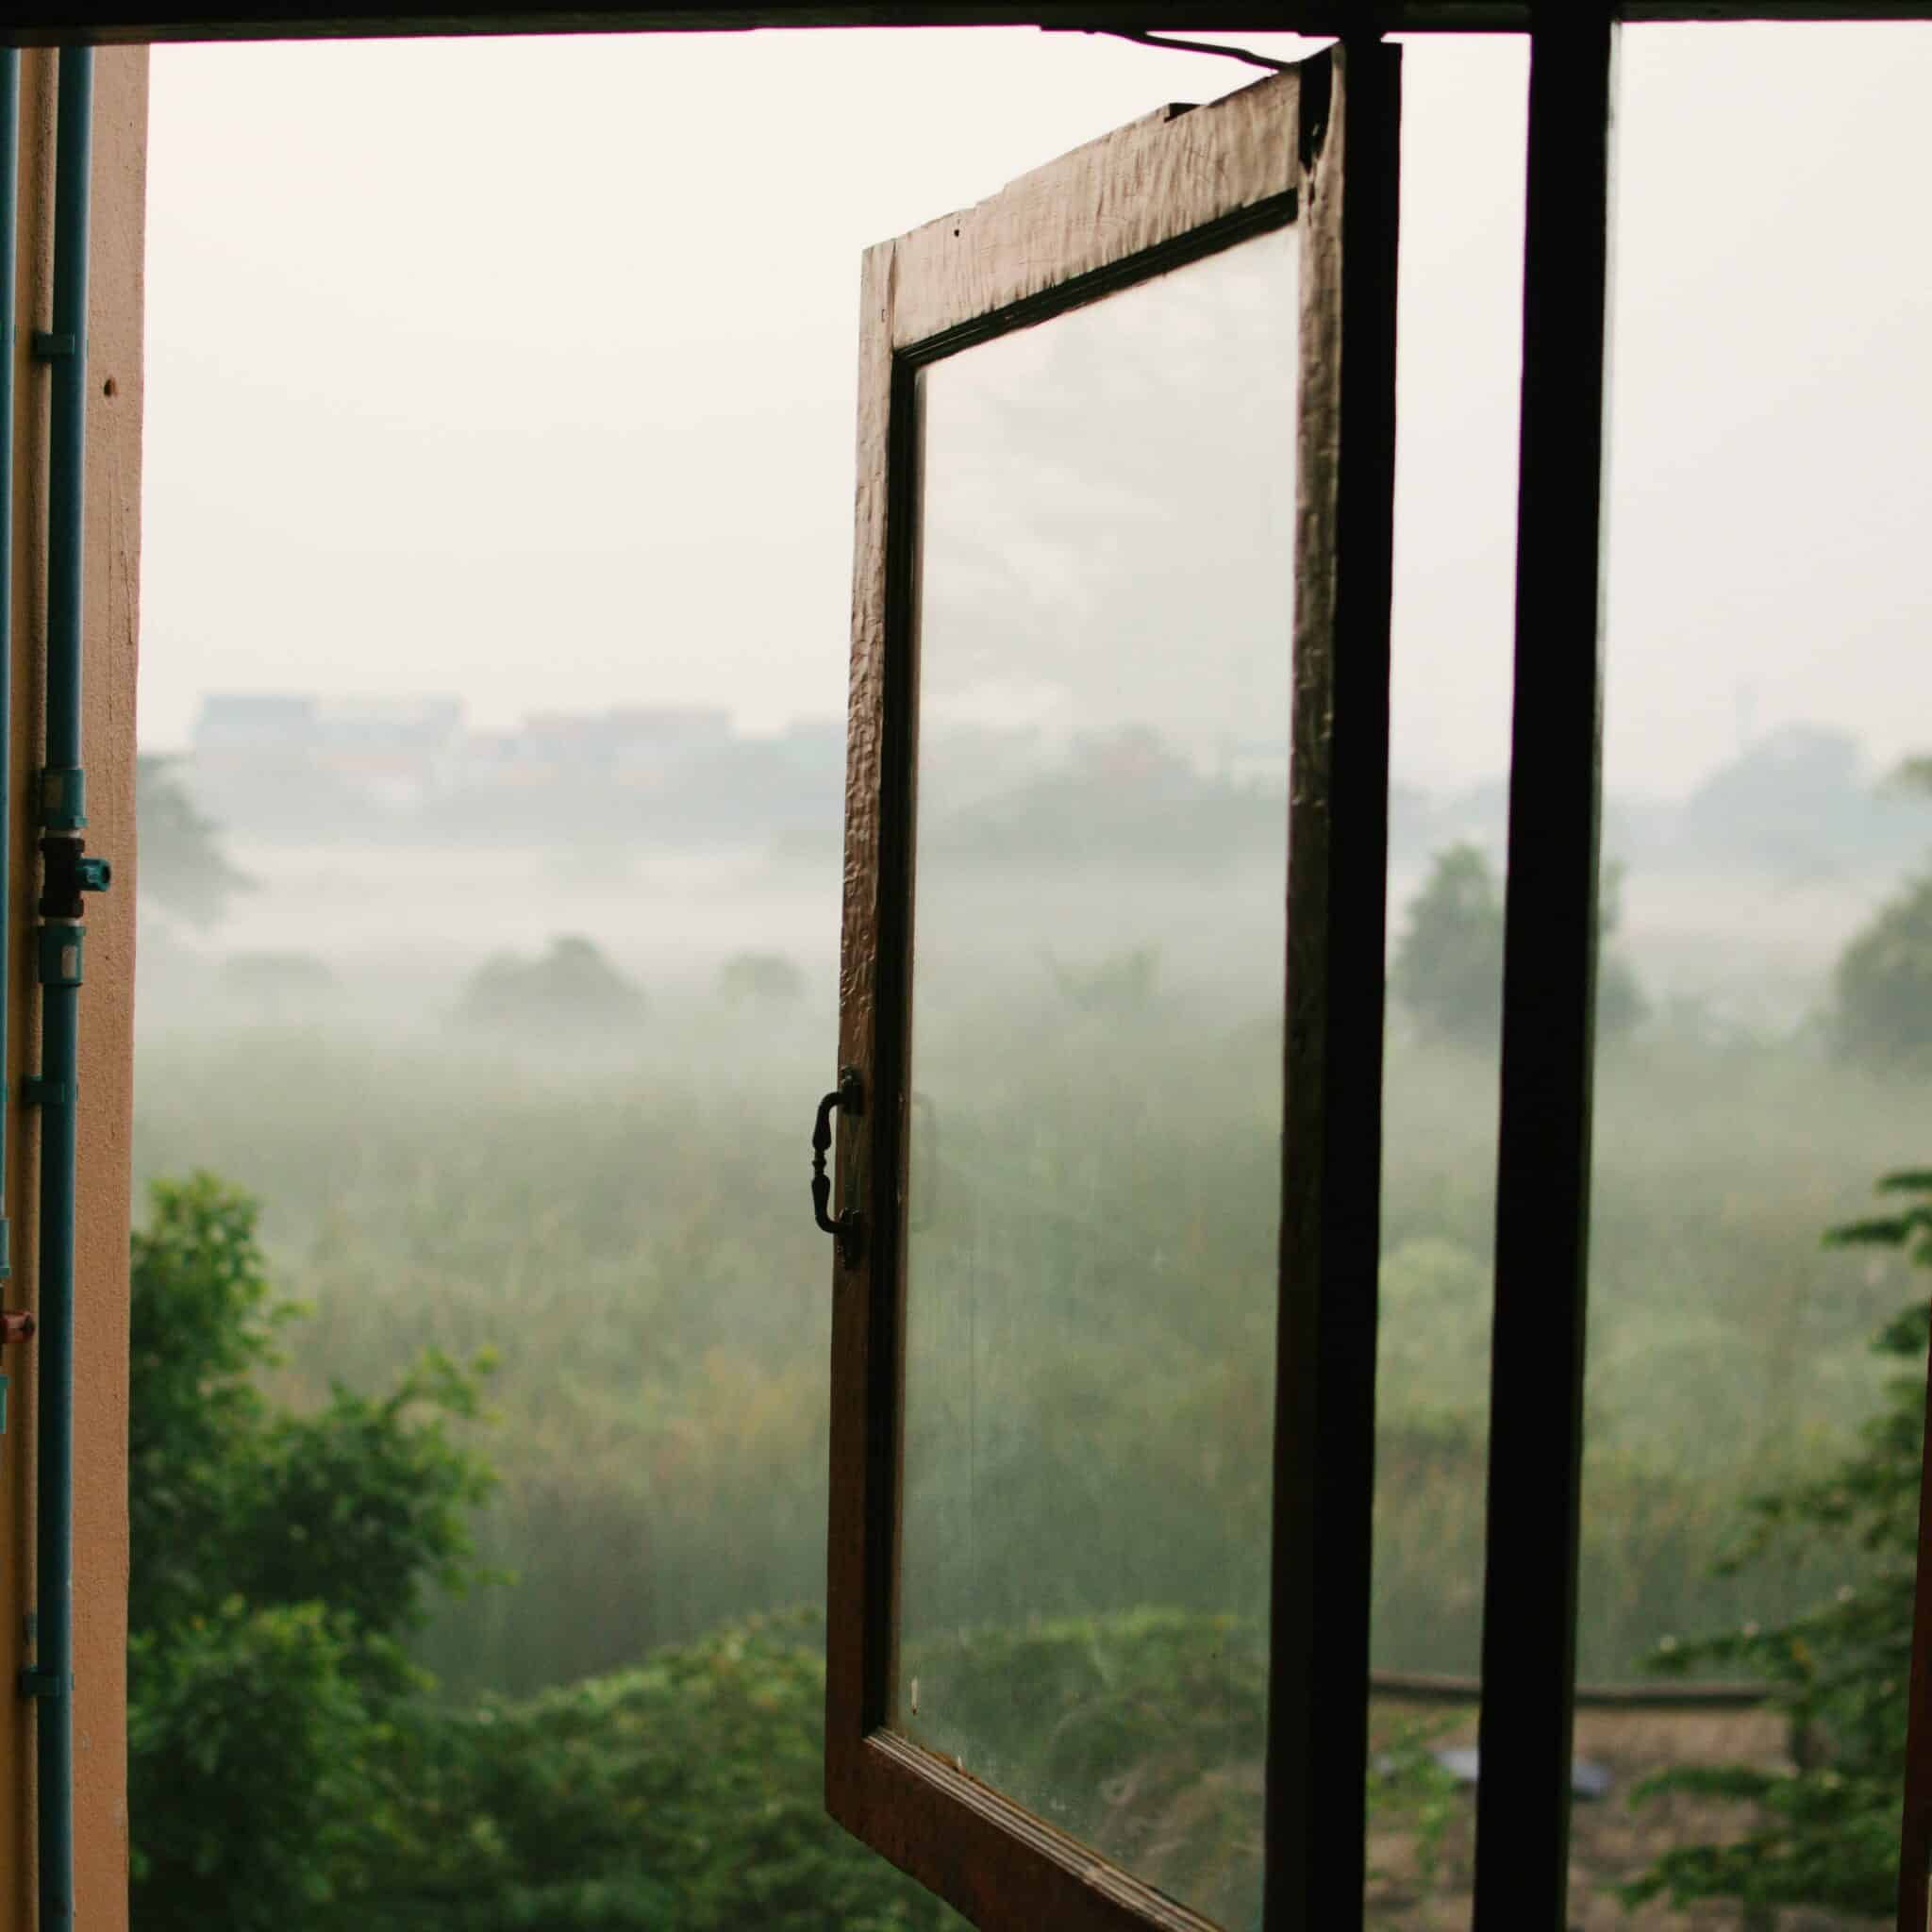 An open window provides a view of a tea plantation.